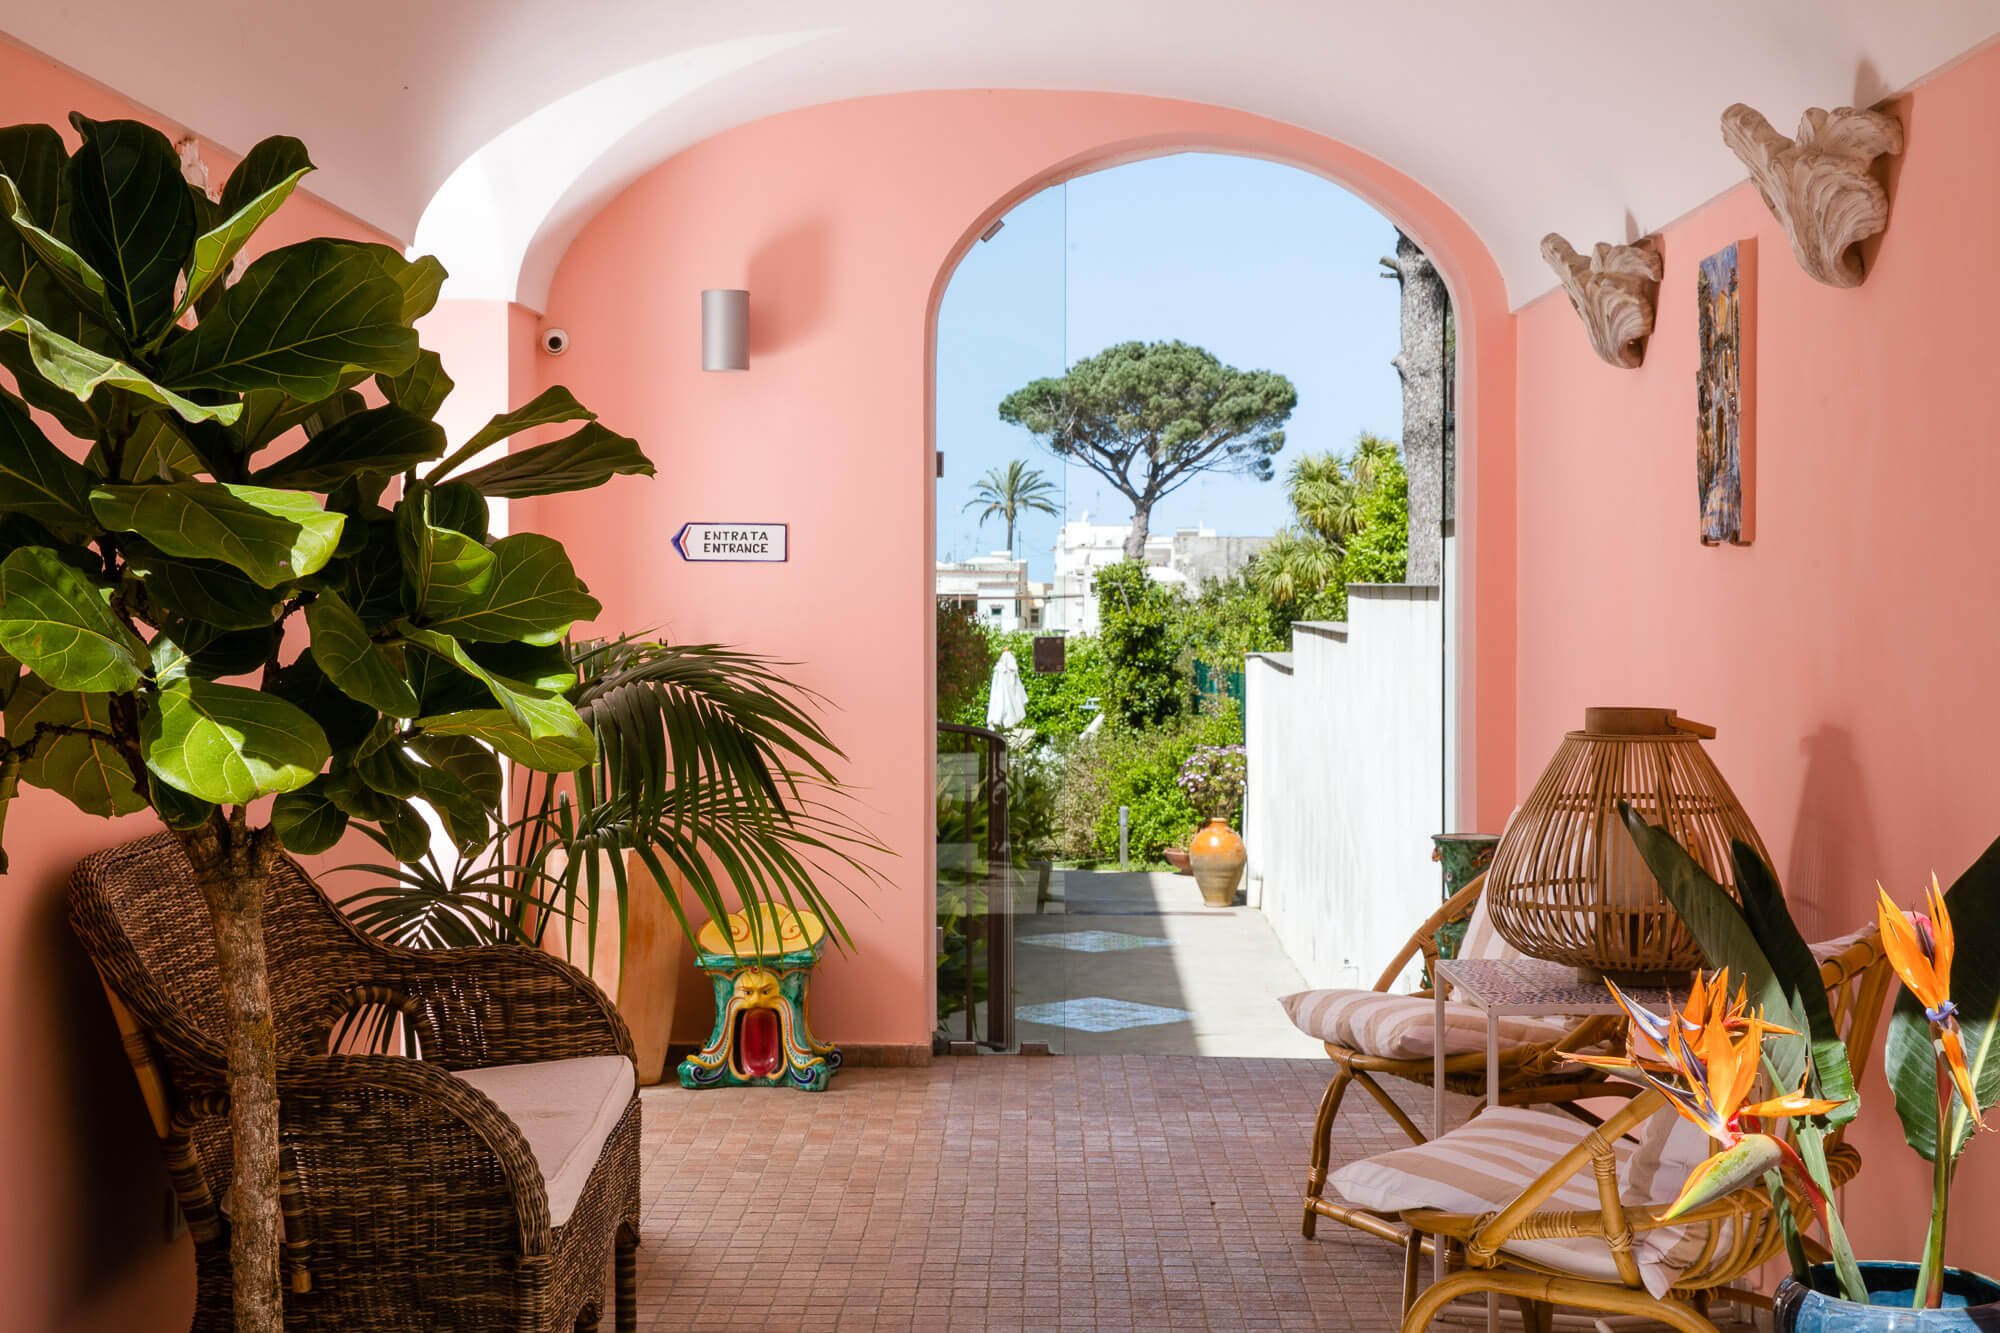 One of the most beautiful luxury hotels in Capri, Casa Mariantonia